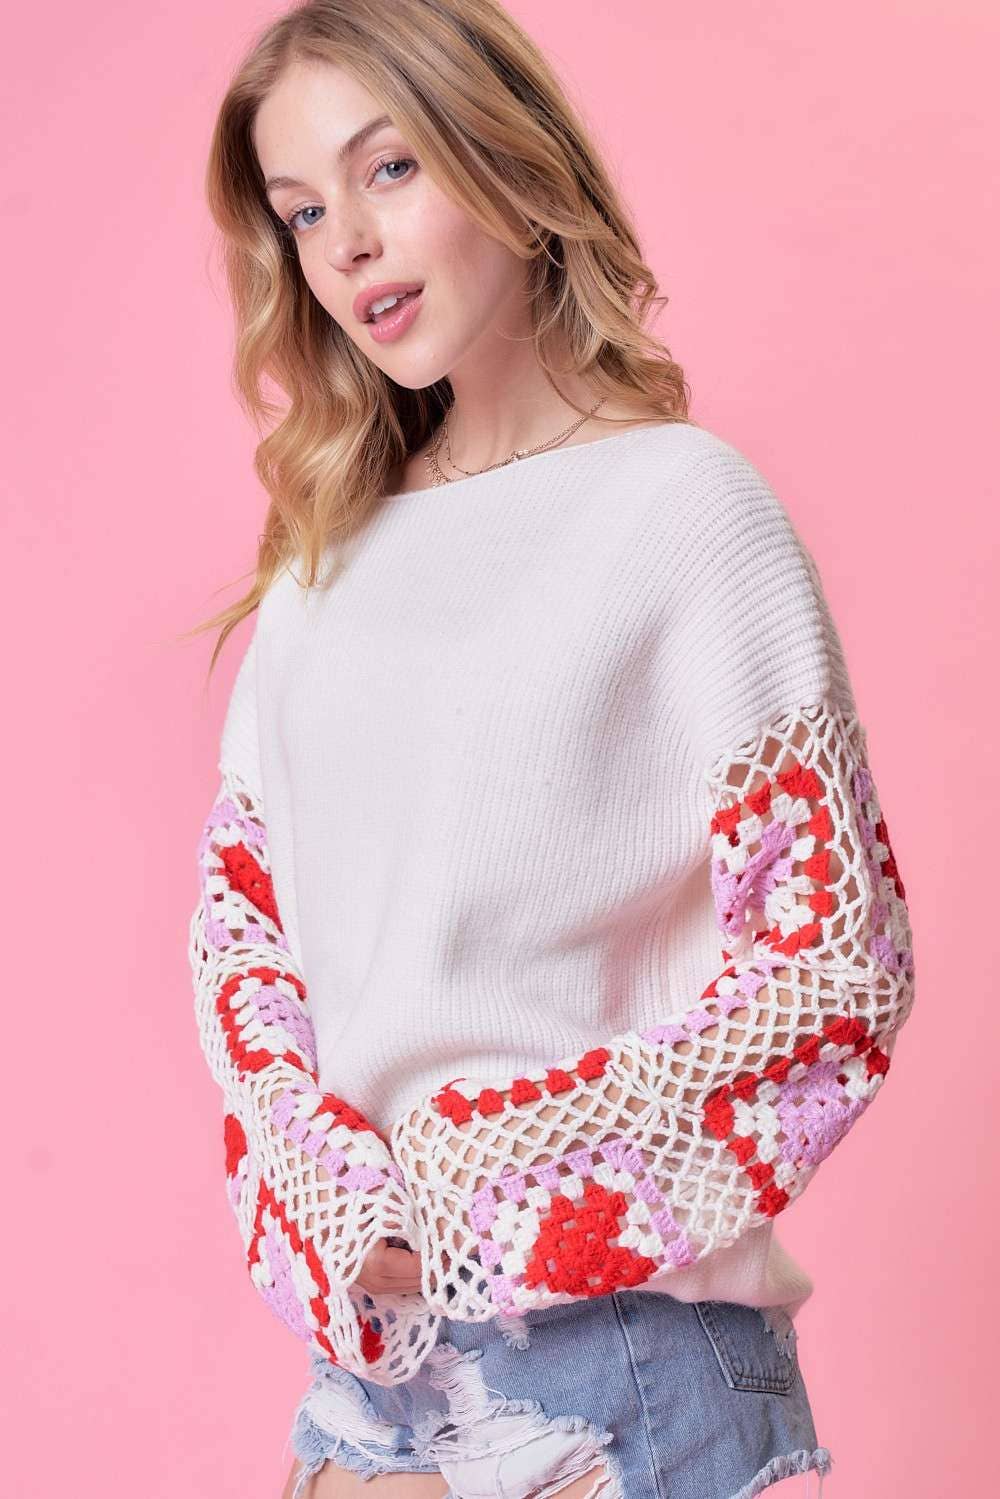 Main Strip - Sleeve Heart Crochet Sweater